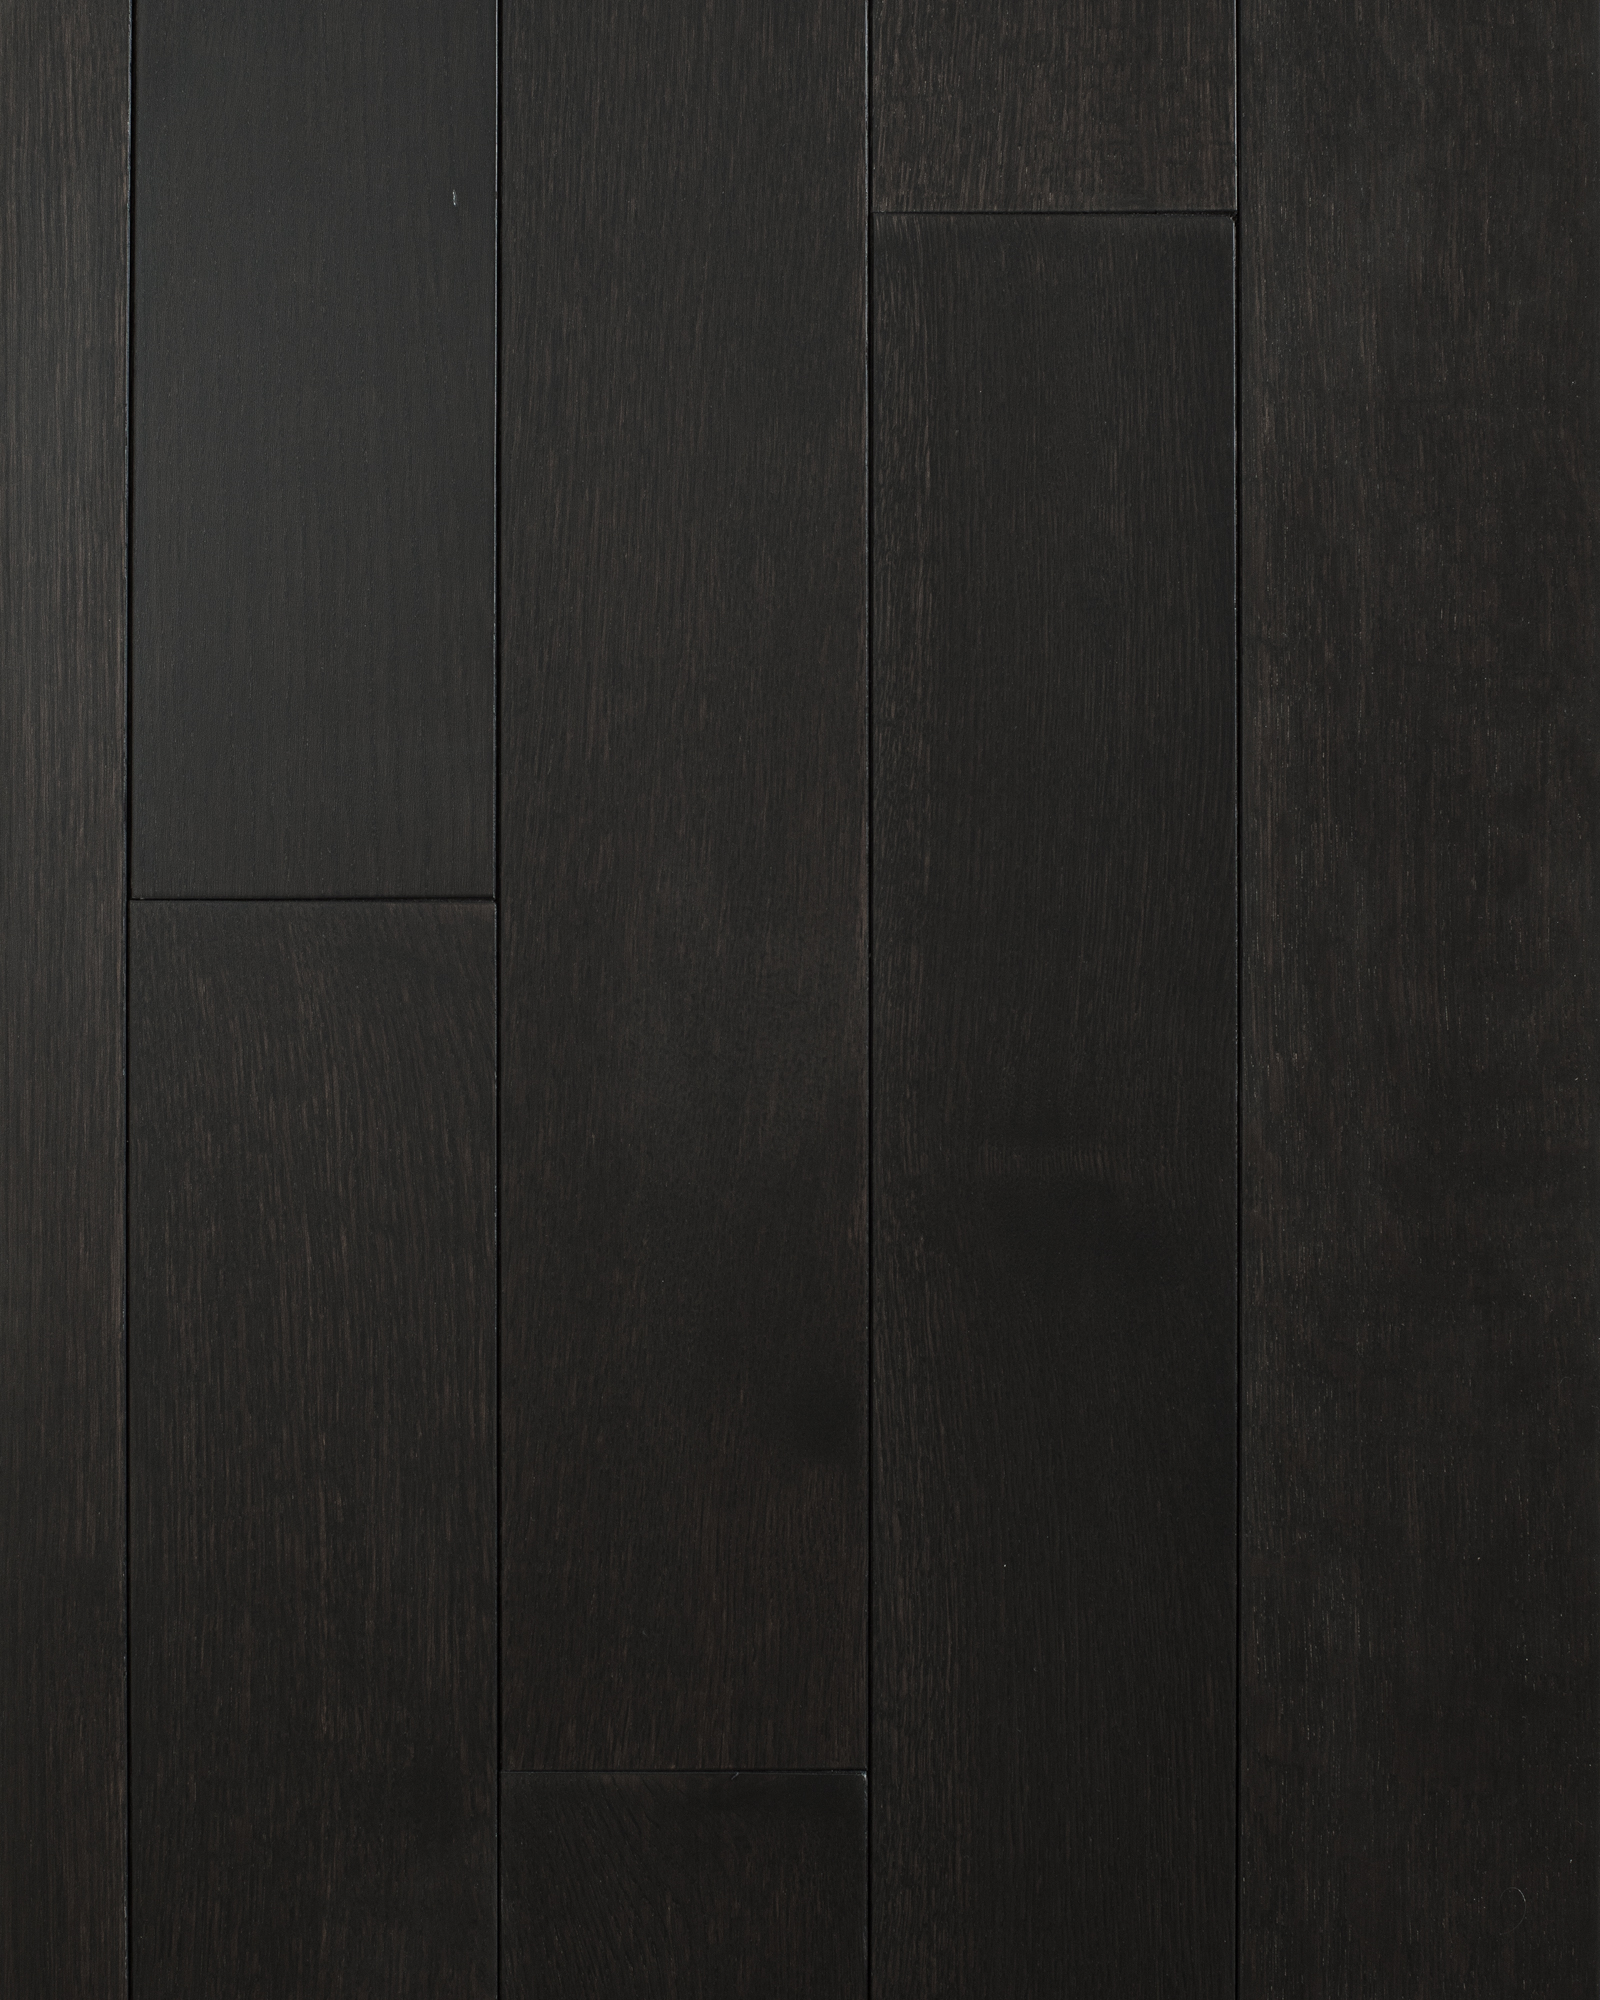 Ebony Terra Legno, Dark Ebony Hardwood Floors